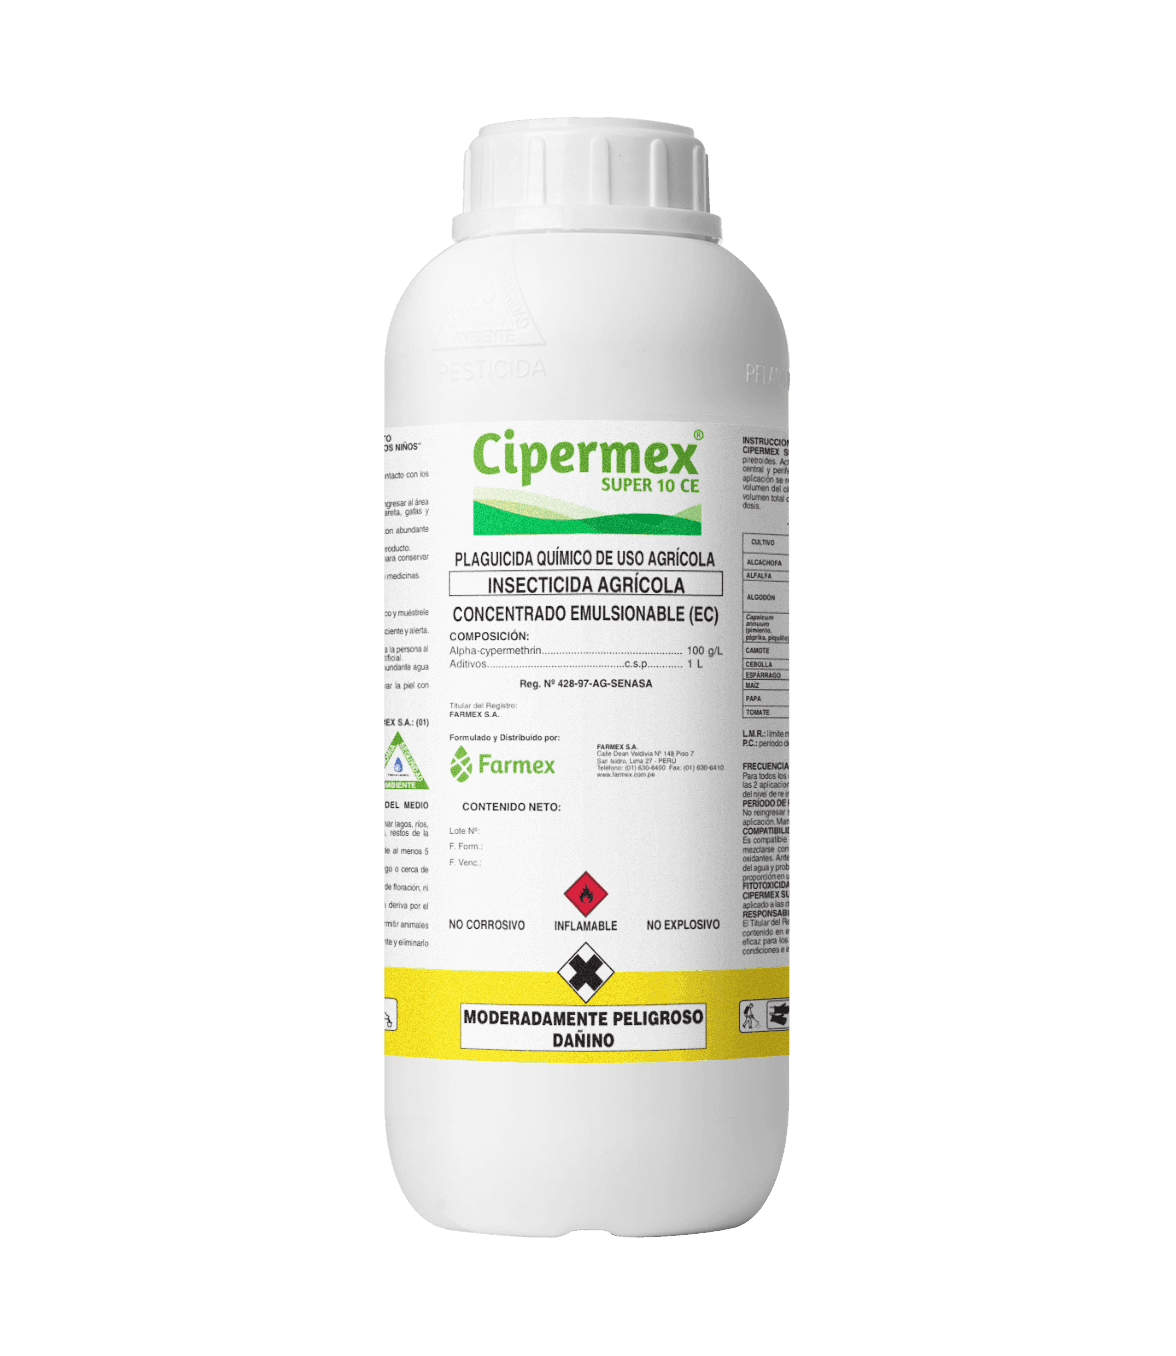 Cipermex Super 10 CE